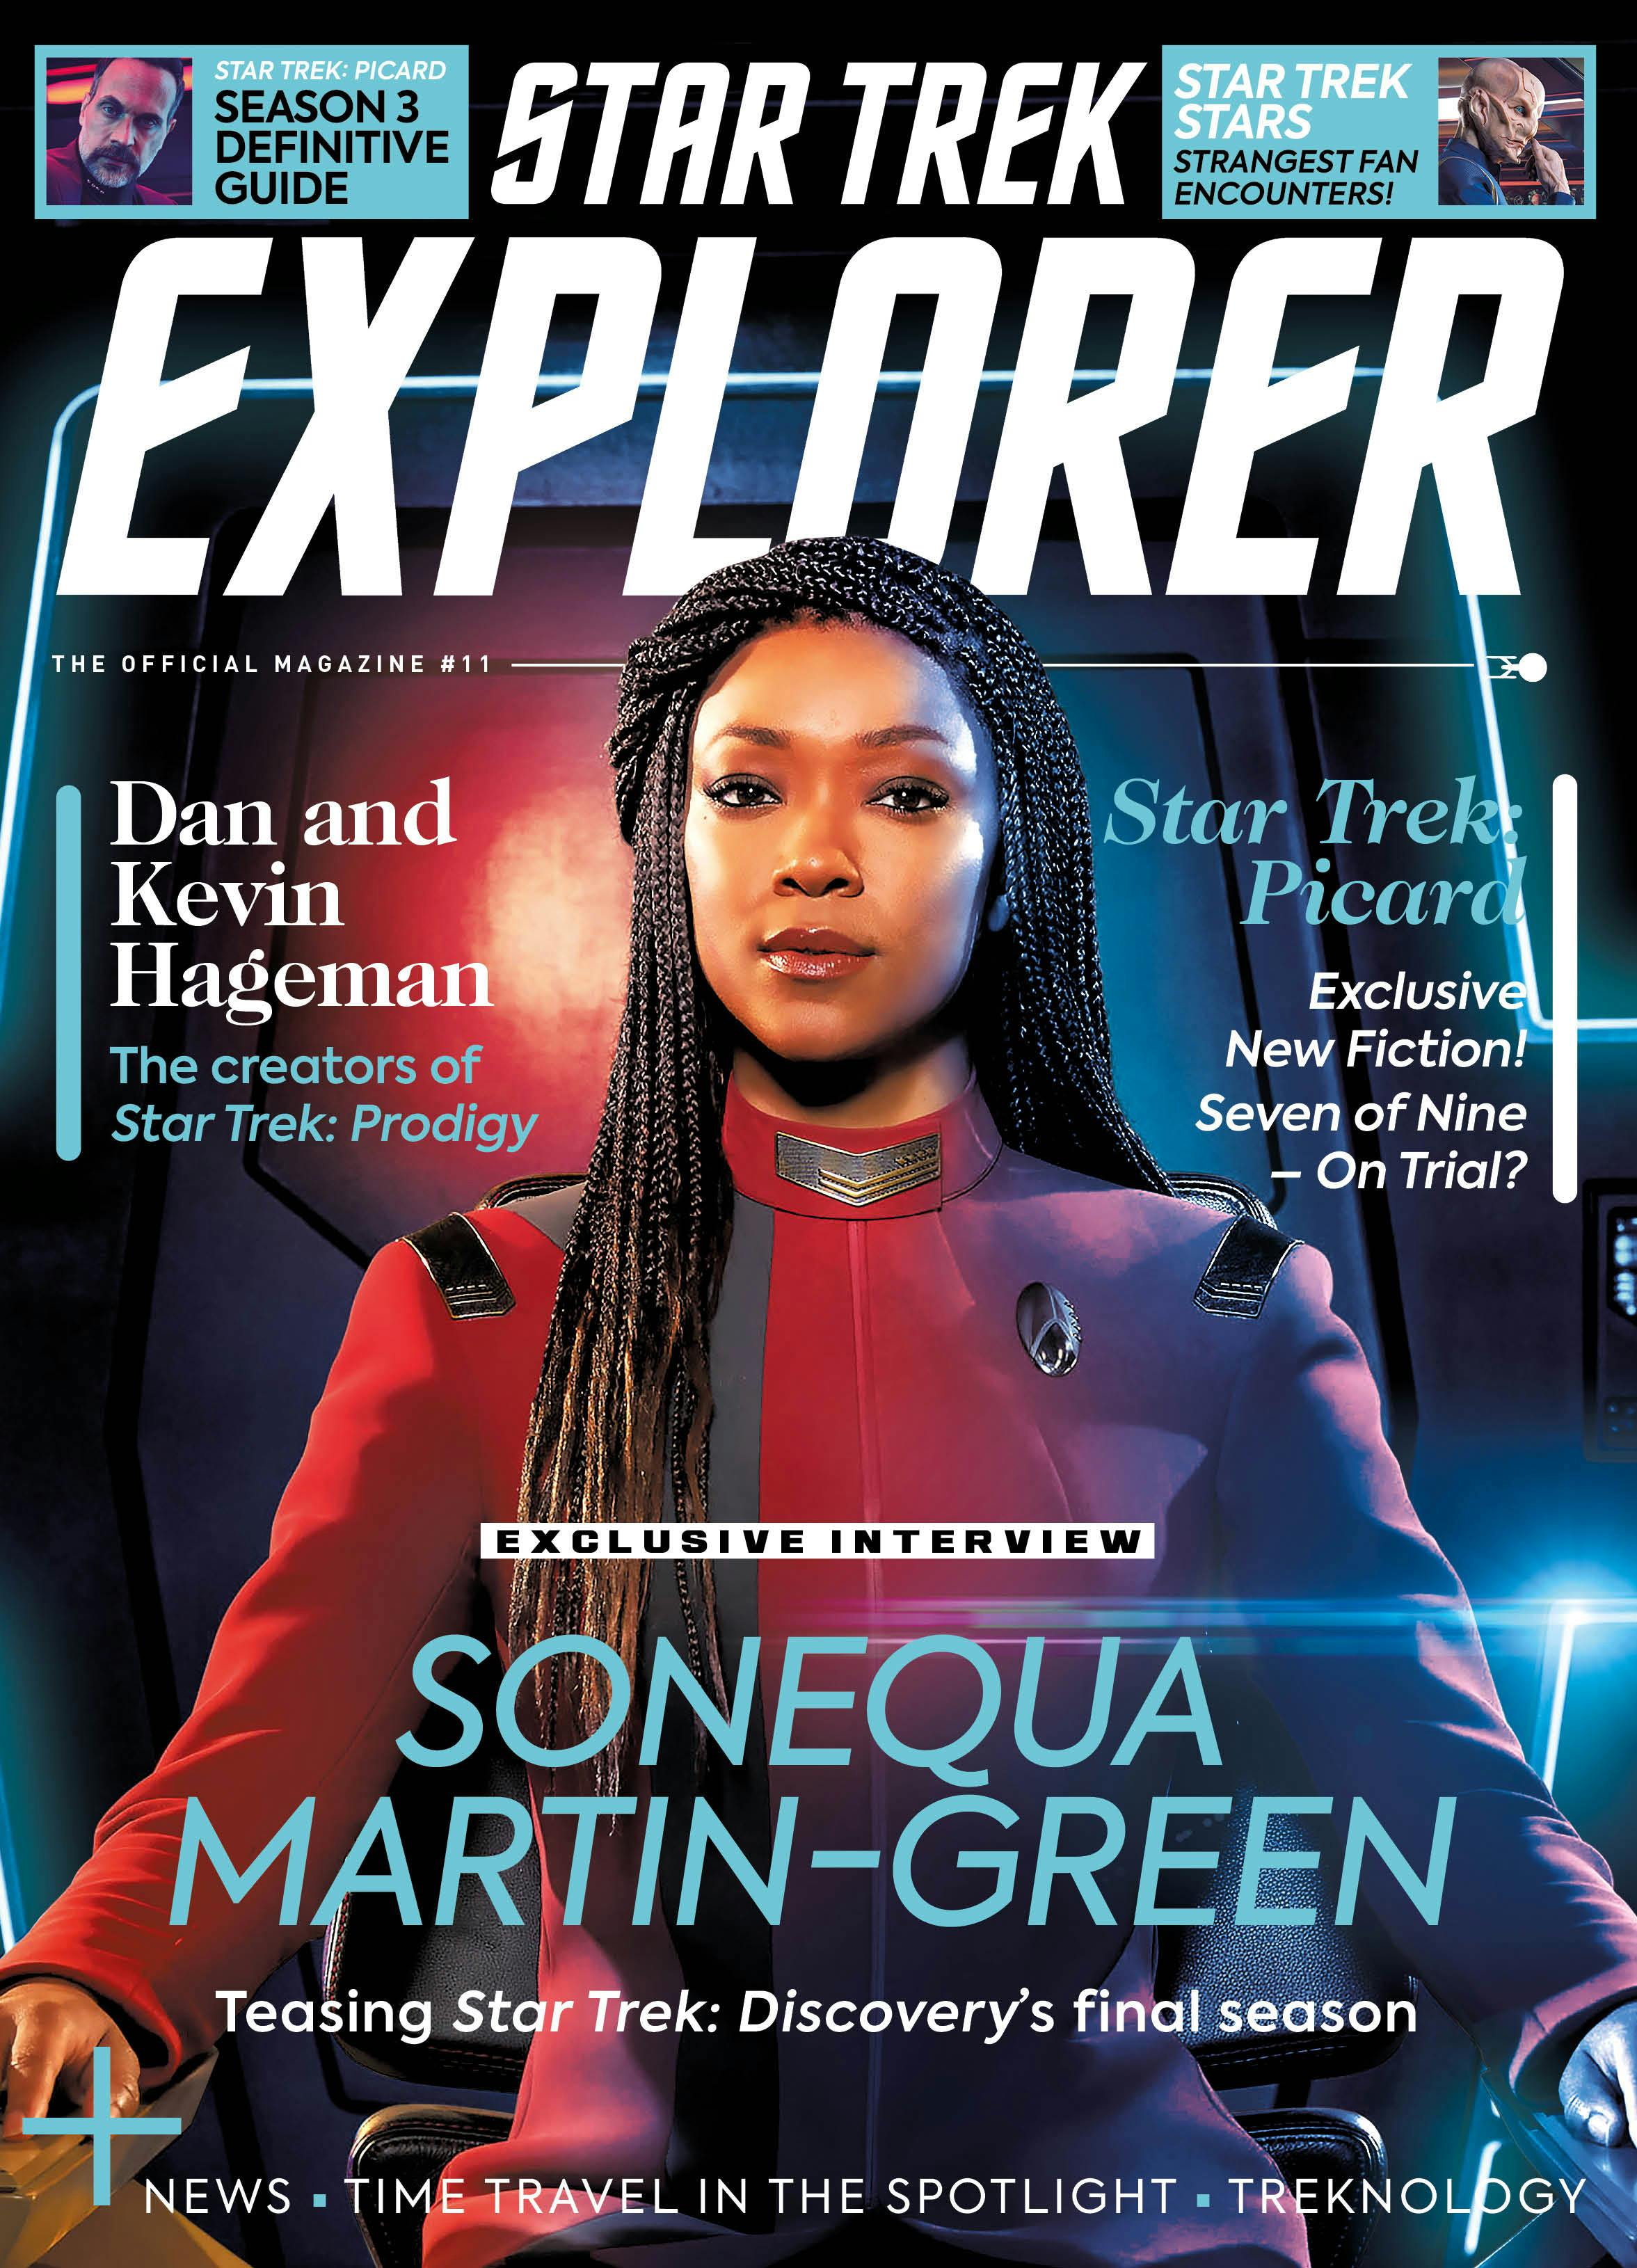 Star Trek Explorer #11 Newsstand cover featuring Captain Michael Burnham